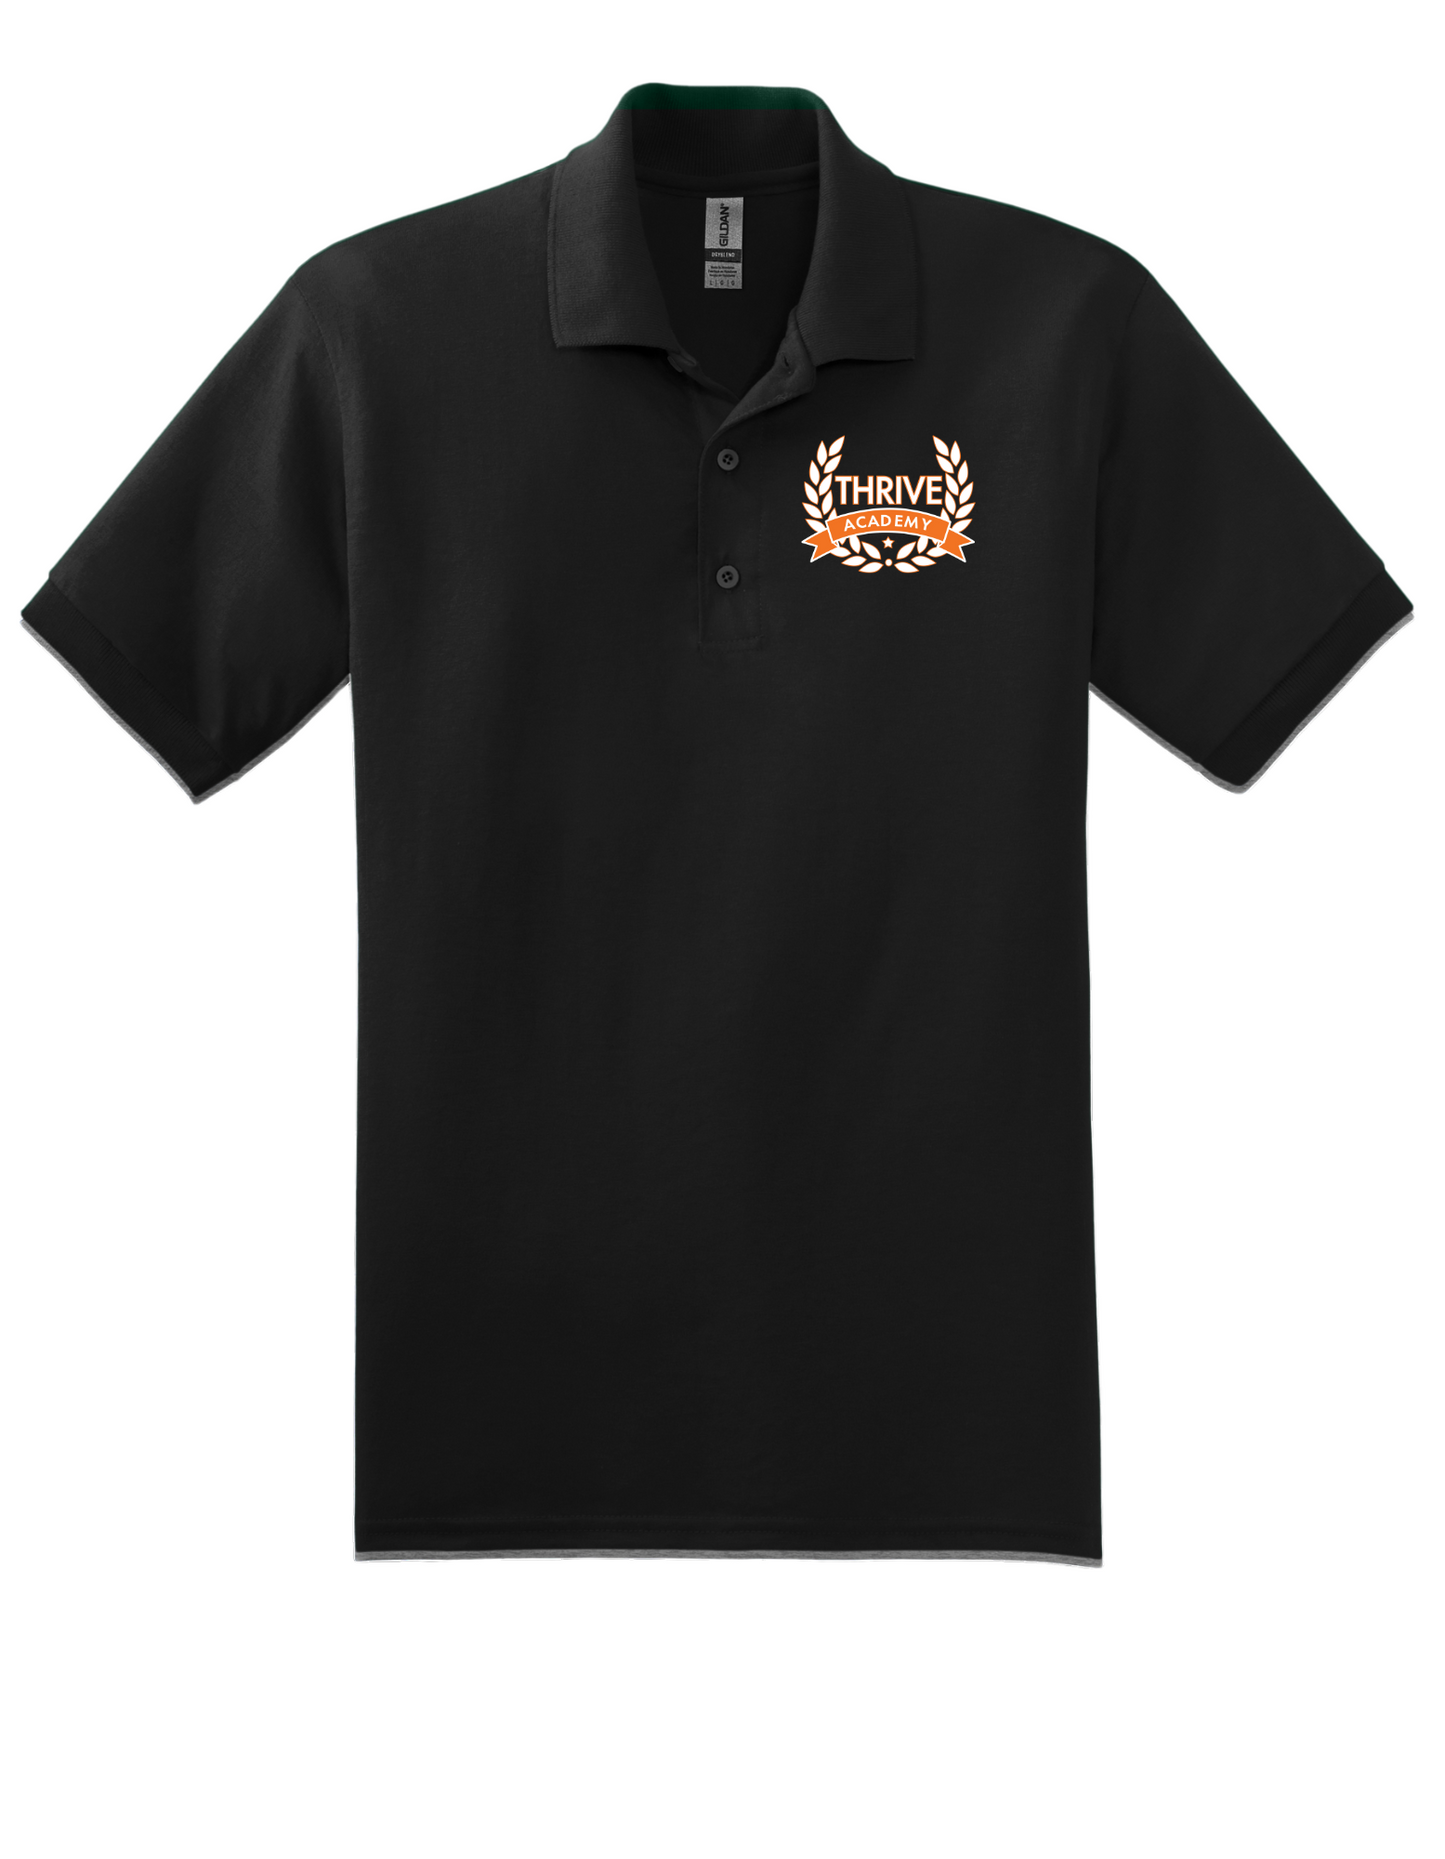 Thrive Academy Black Polo with Embroidered Logo (Seniors Uniform)